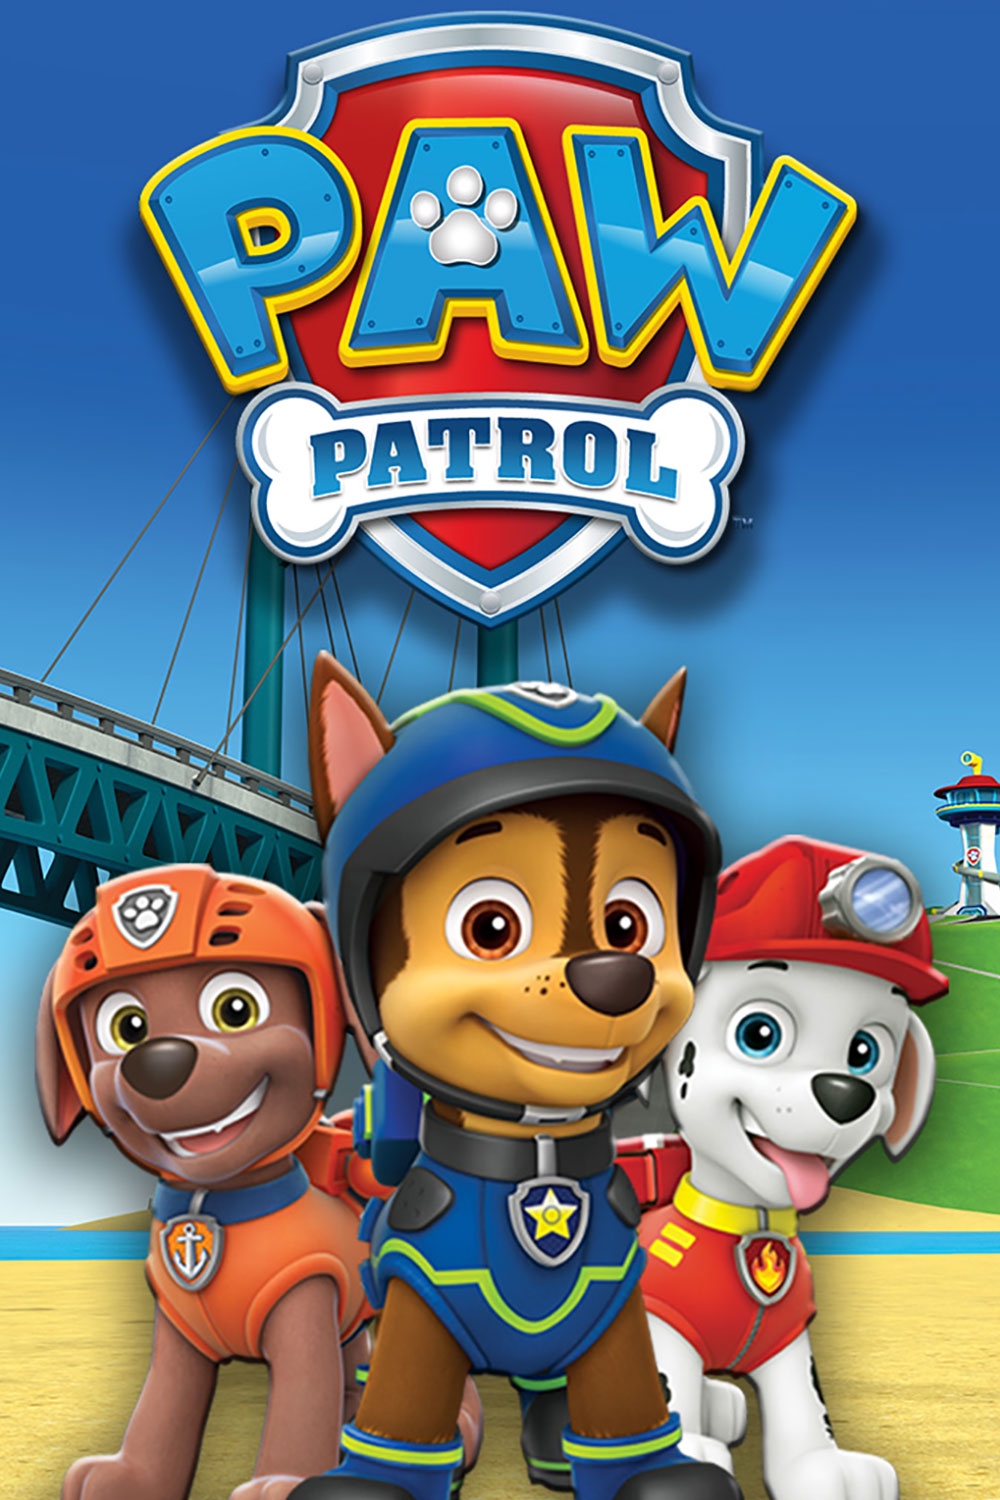 paw patrol streaming service